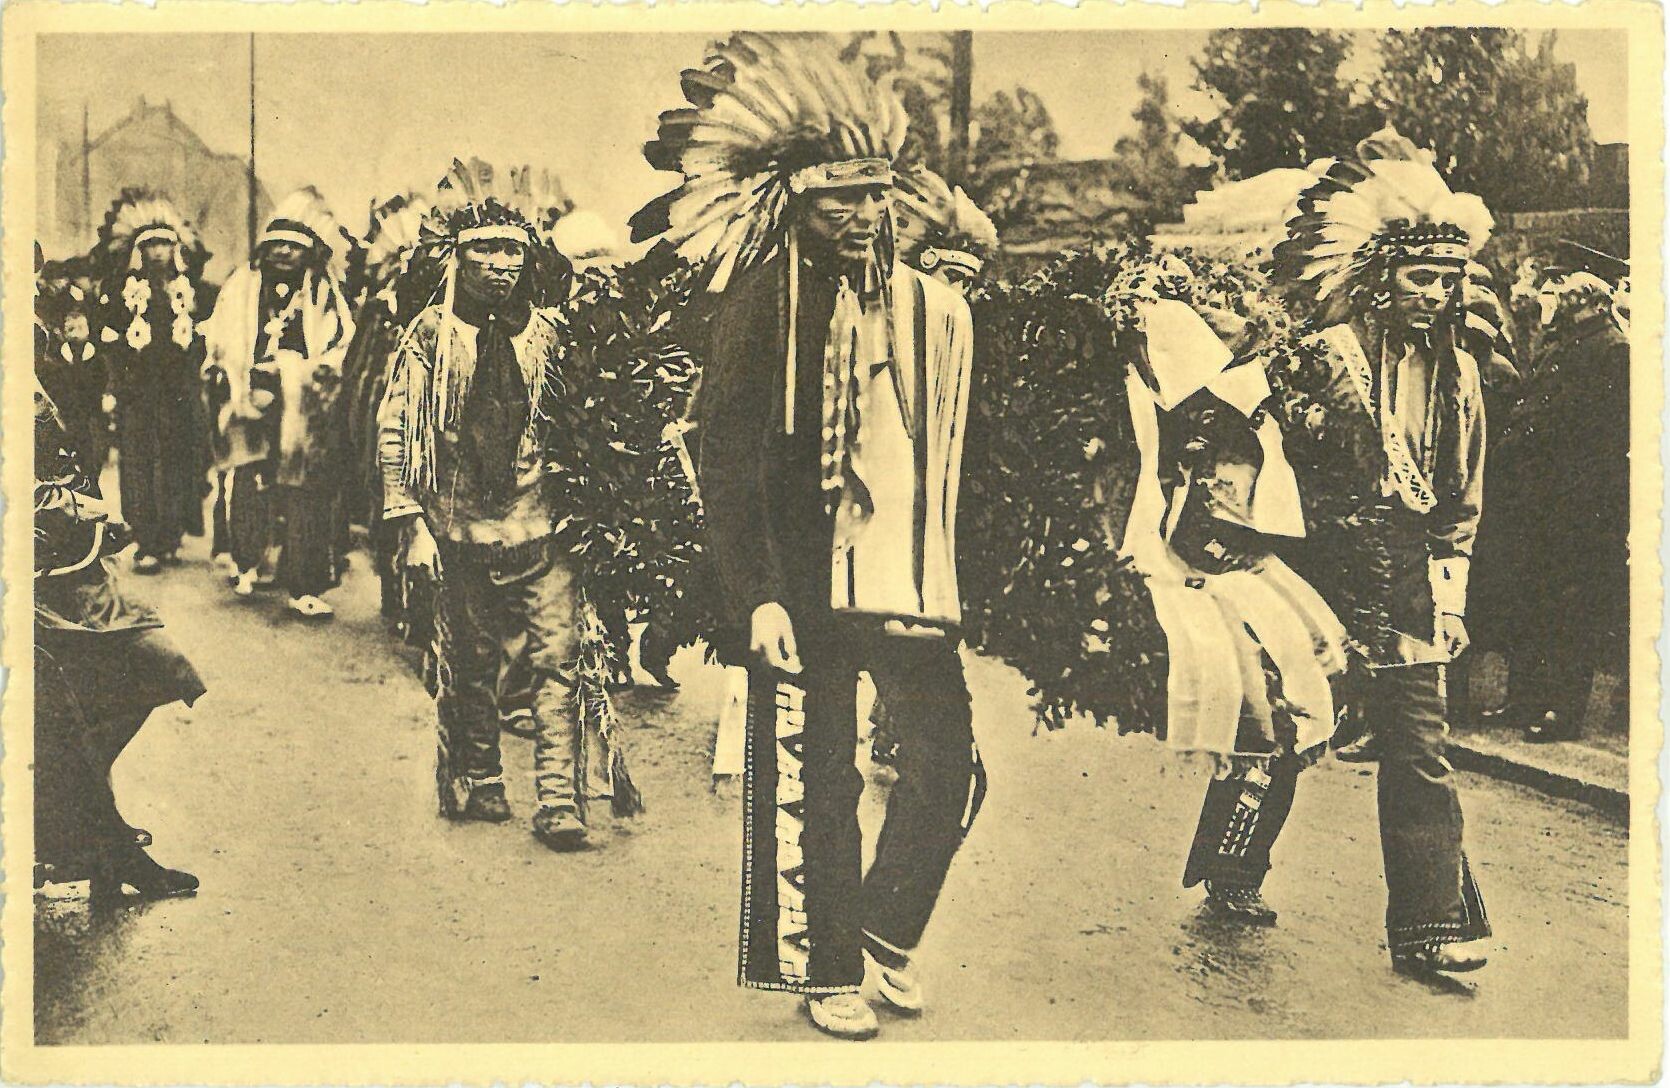 Sioux-Indianer aus dem Weg zu Karl Mays Grab in Radebeul. Januar 1928 (Karl-May-Museum gGmbH RR-R)